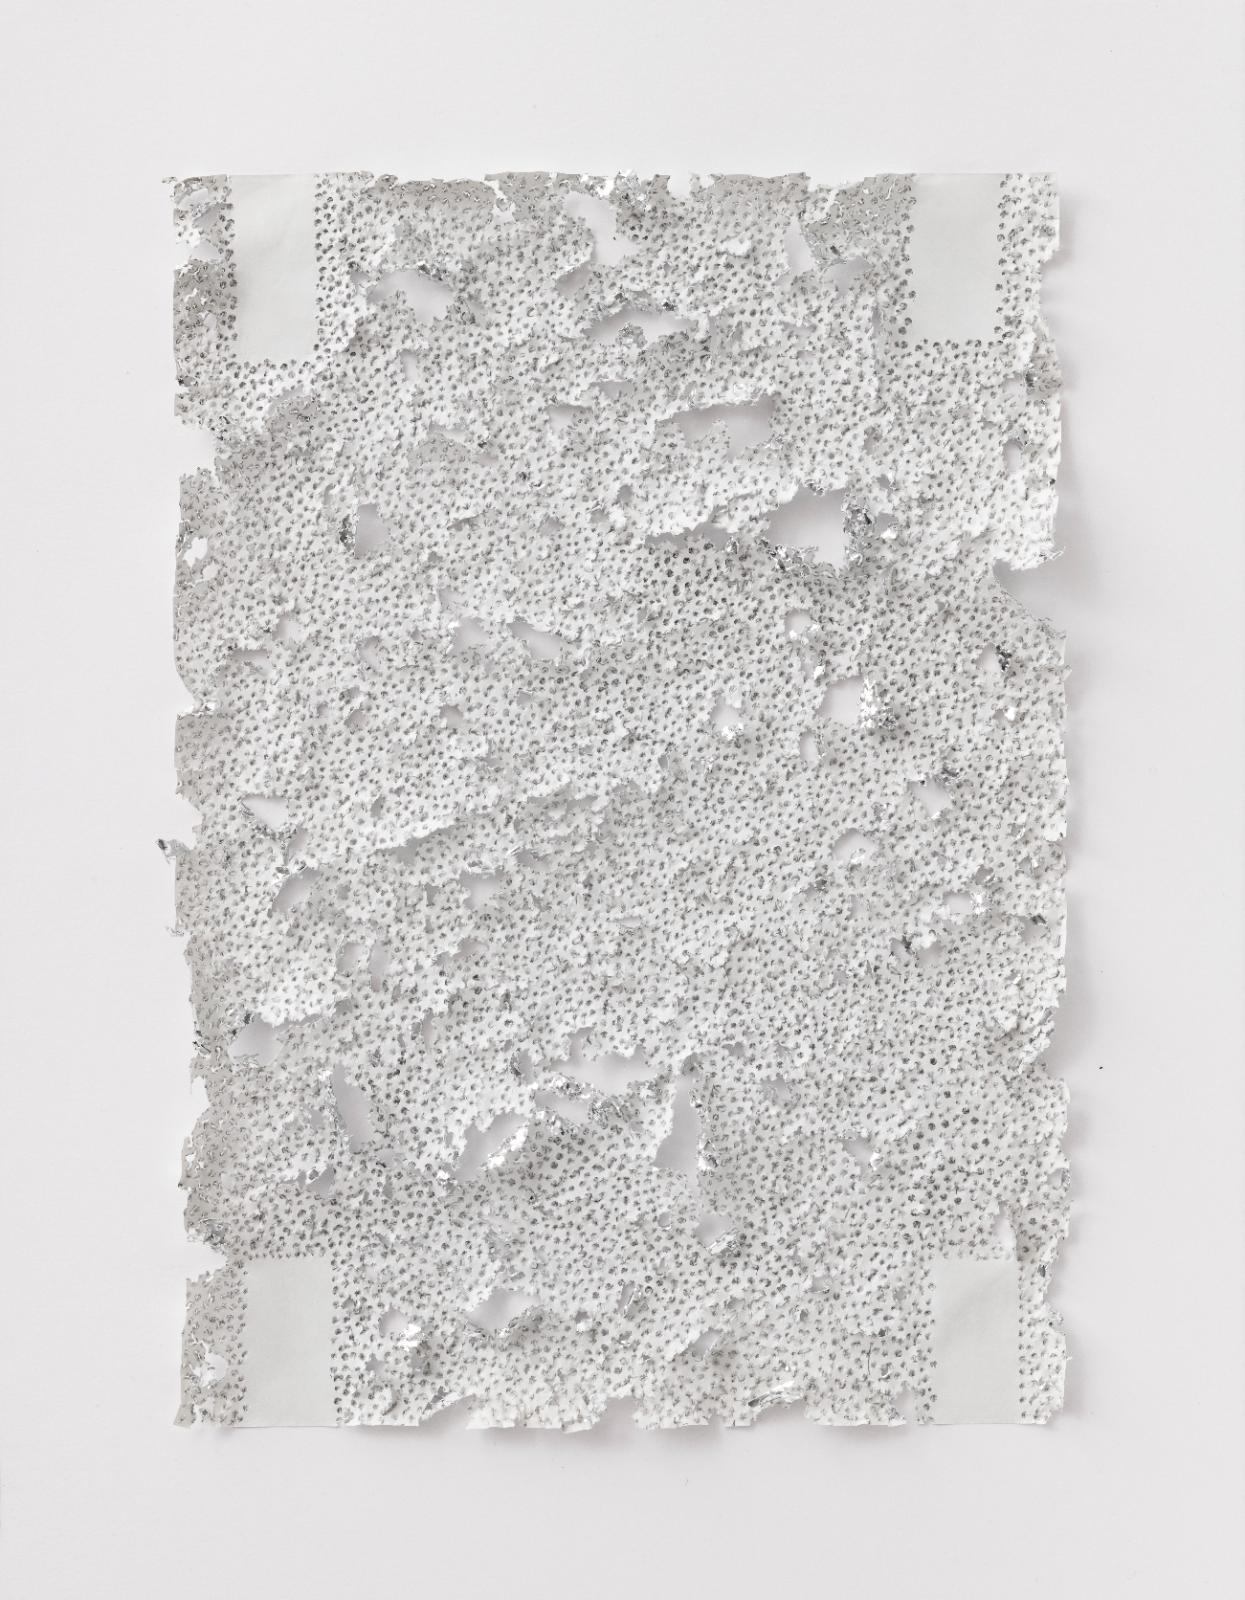 Martin Bruno Schmid, Bleistiftspitze in Papier #1, 2020, Bleistift in Papier, 41 × 31 cm, verkauft!